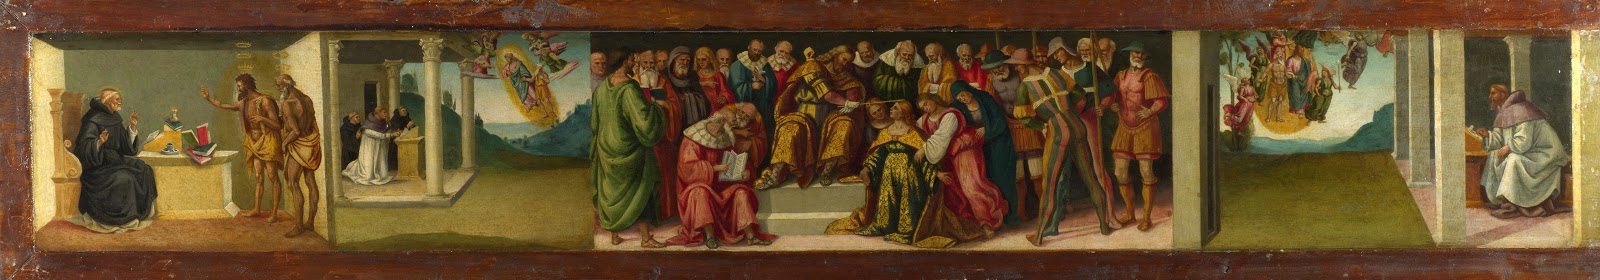 Luca+Signorelli-1445-1523 (18).jpg